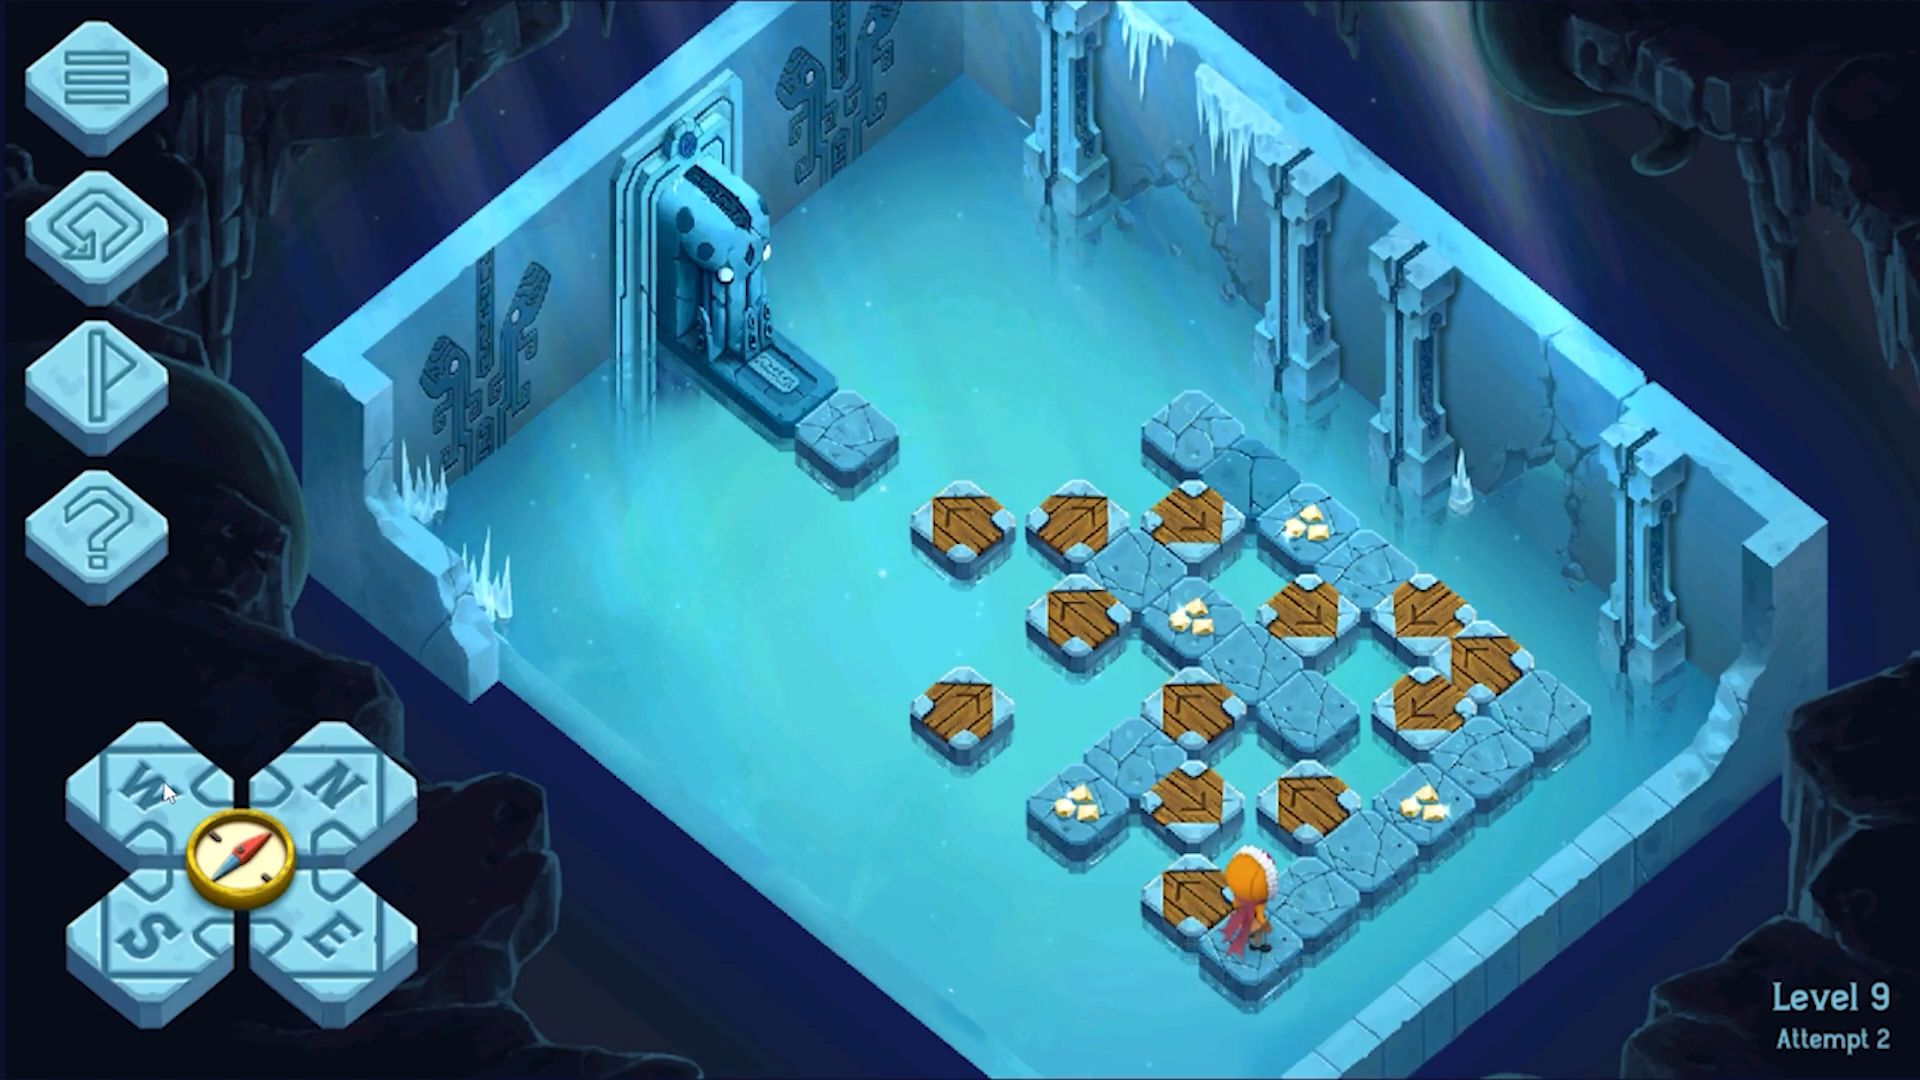 Treasure Temples - Android game screenshots.